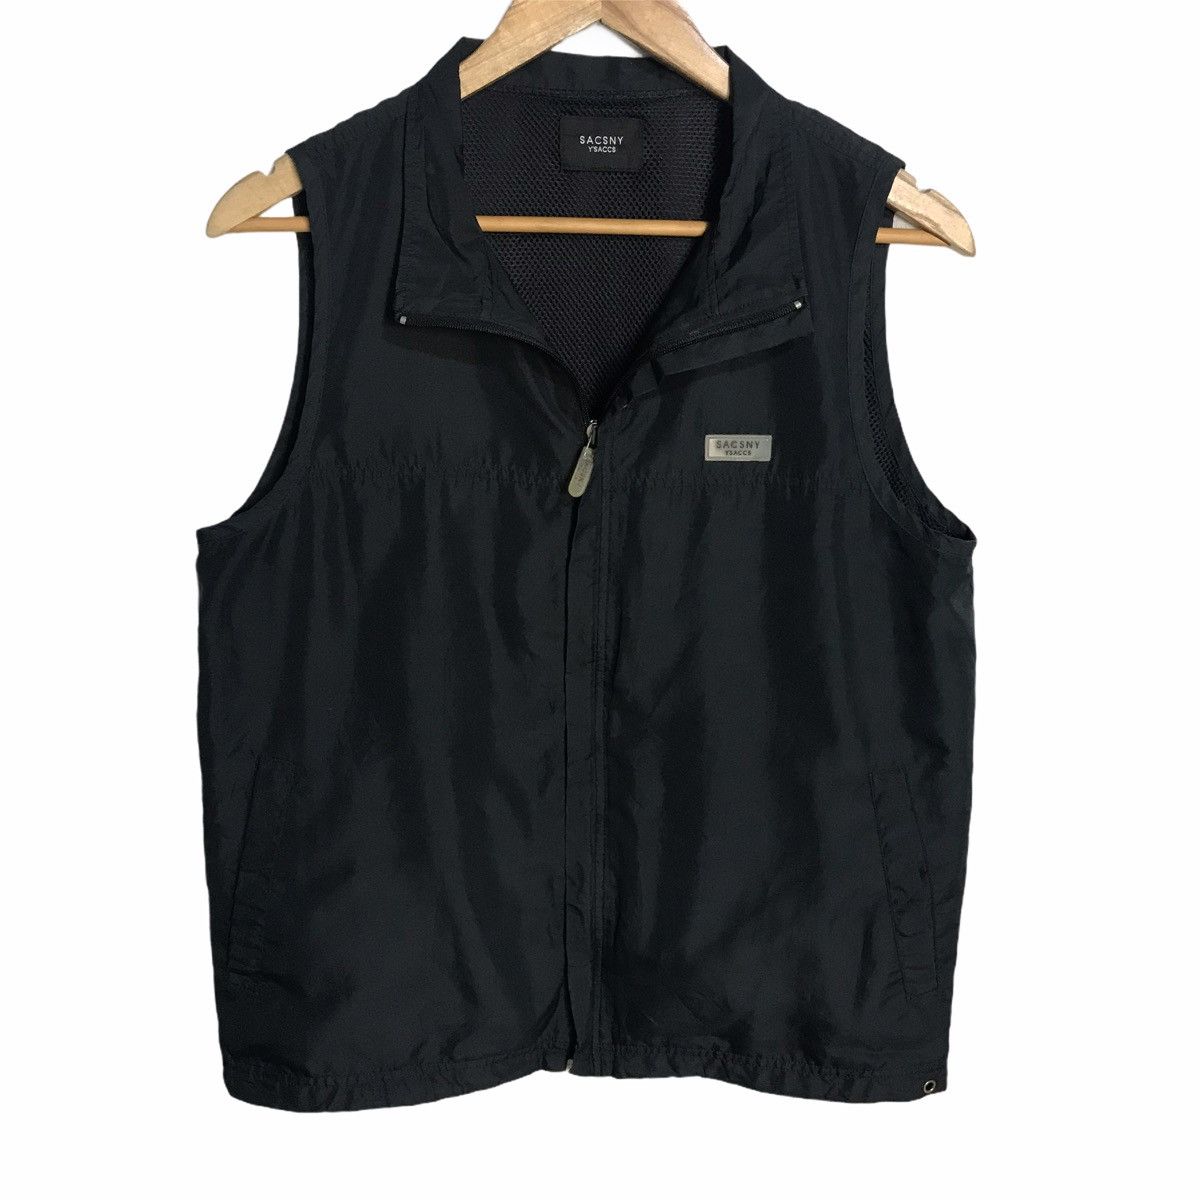 Sacsny y’saccs black nylon vest - 1